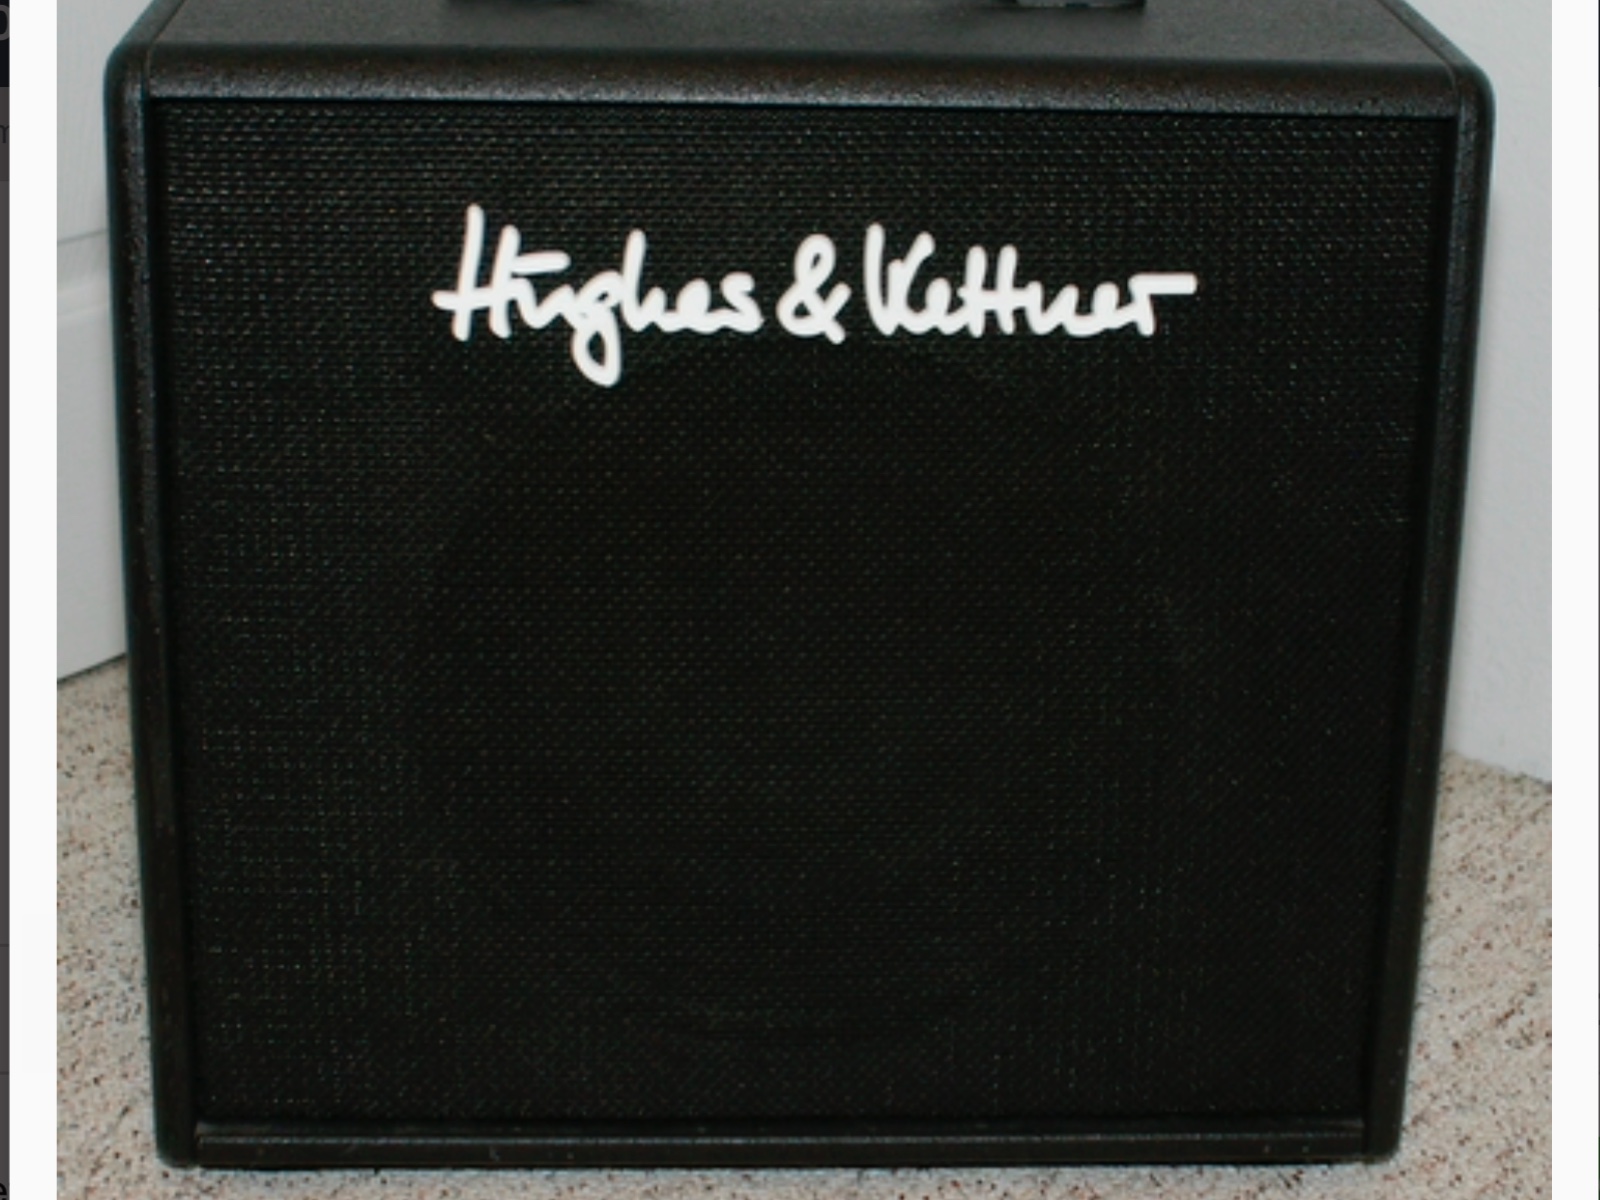 Edition 1 - Hughes & Kettner Edition 1 - Audiofanzine